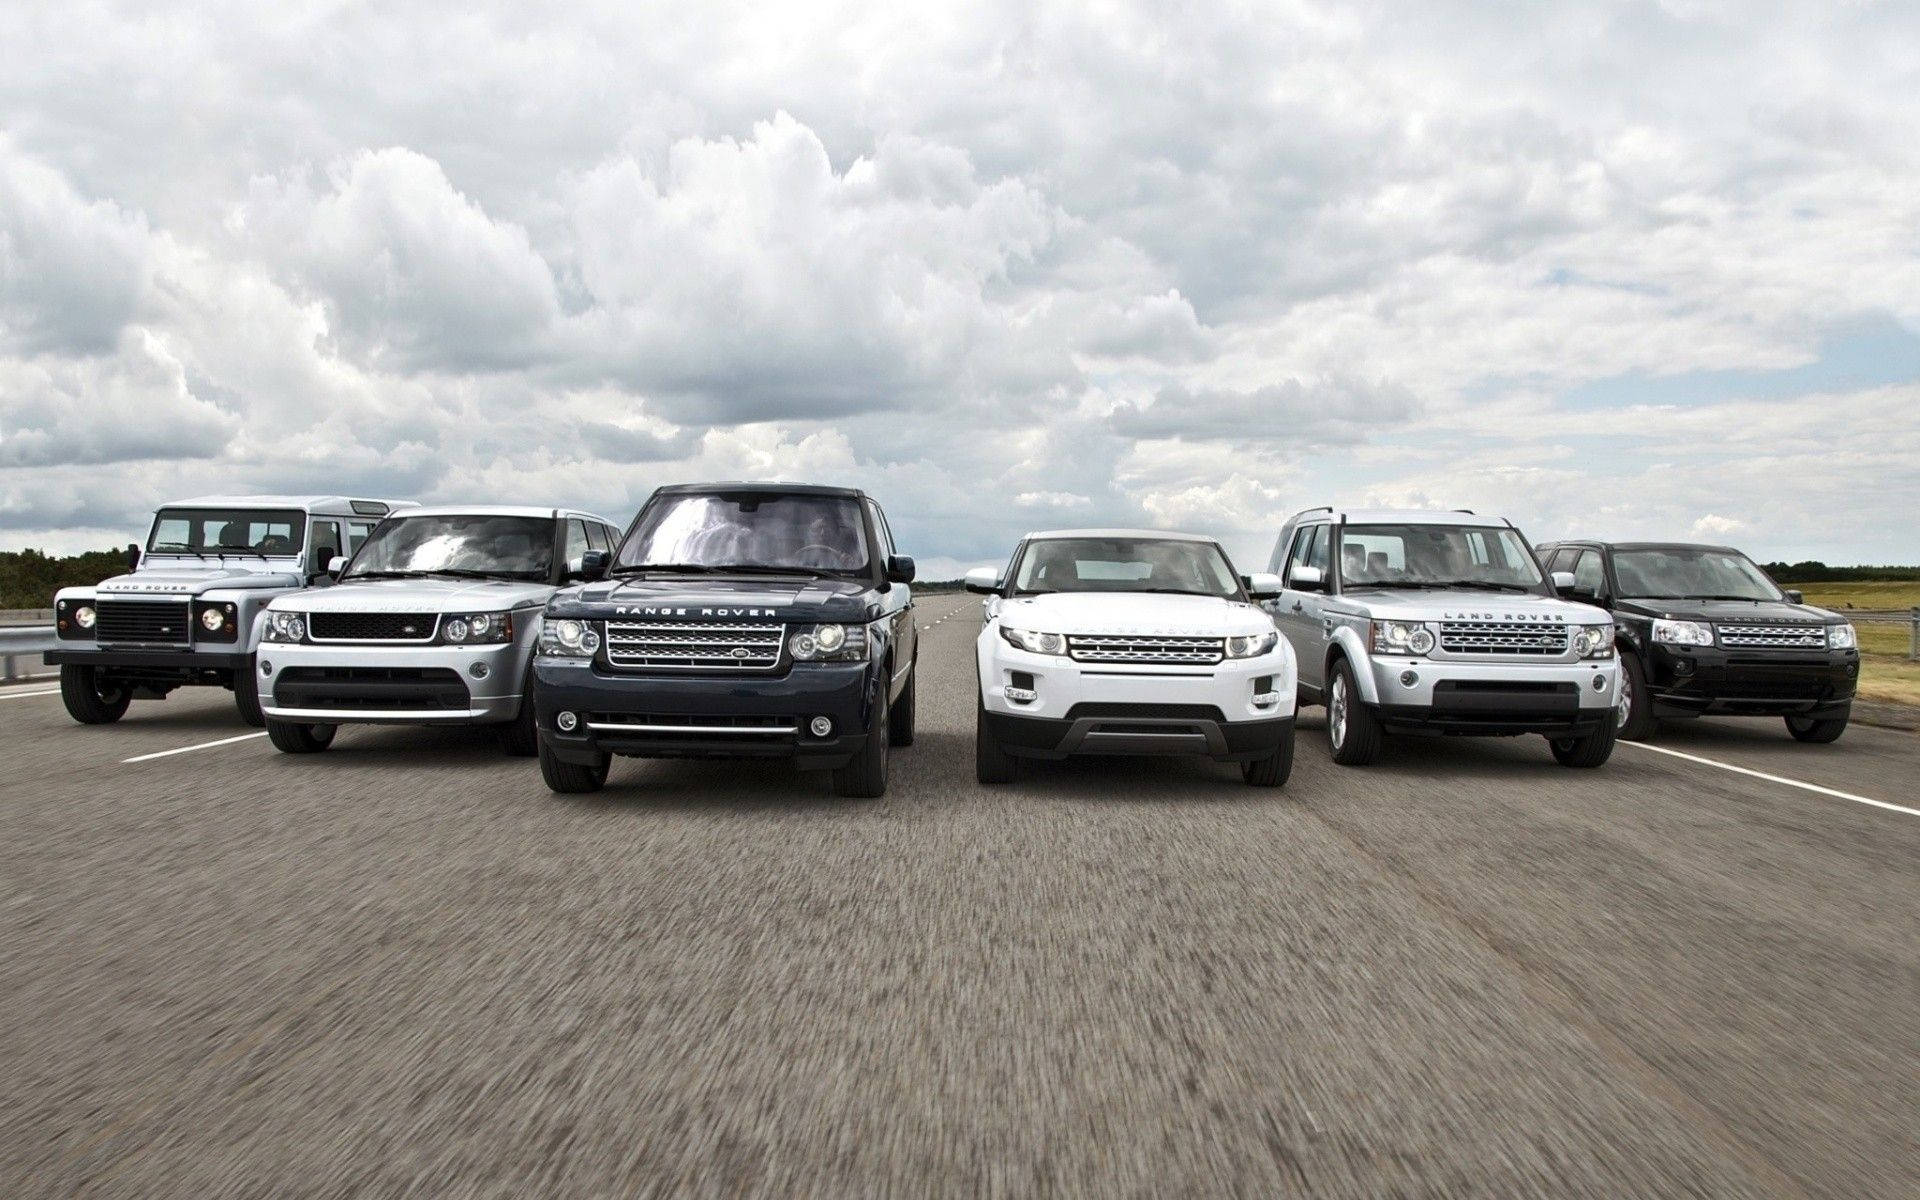 Six Land Rover vehicles wallpaper